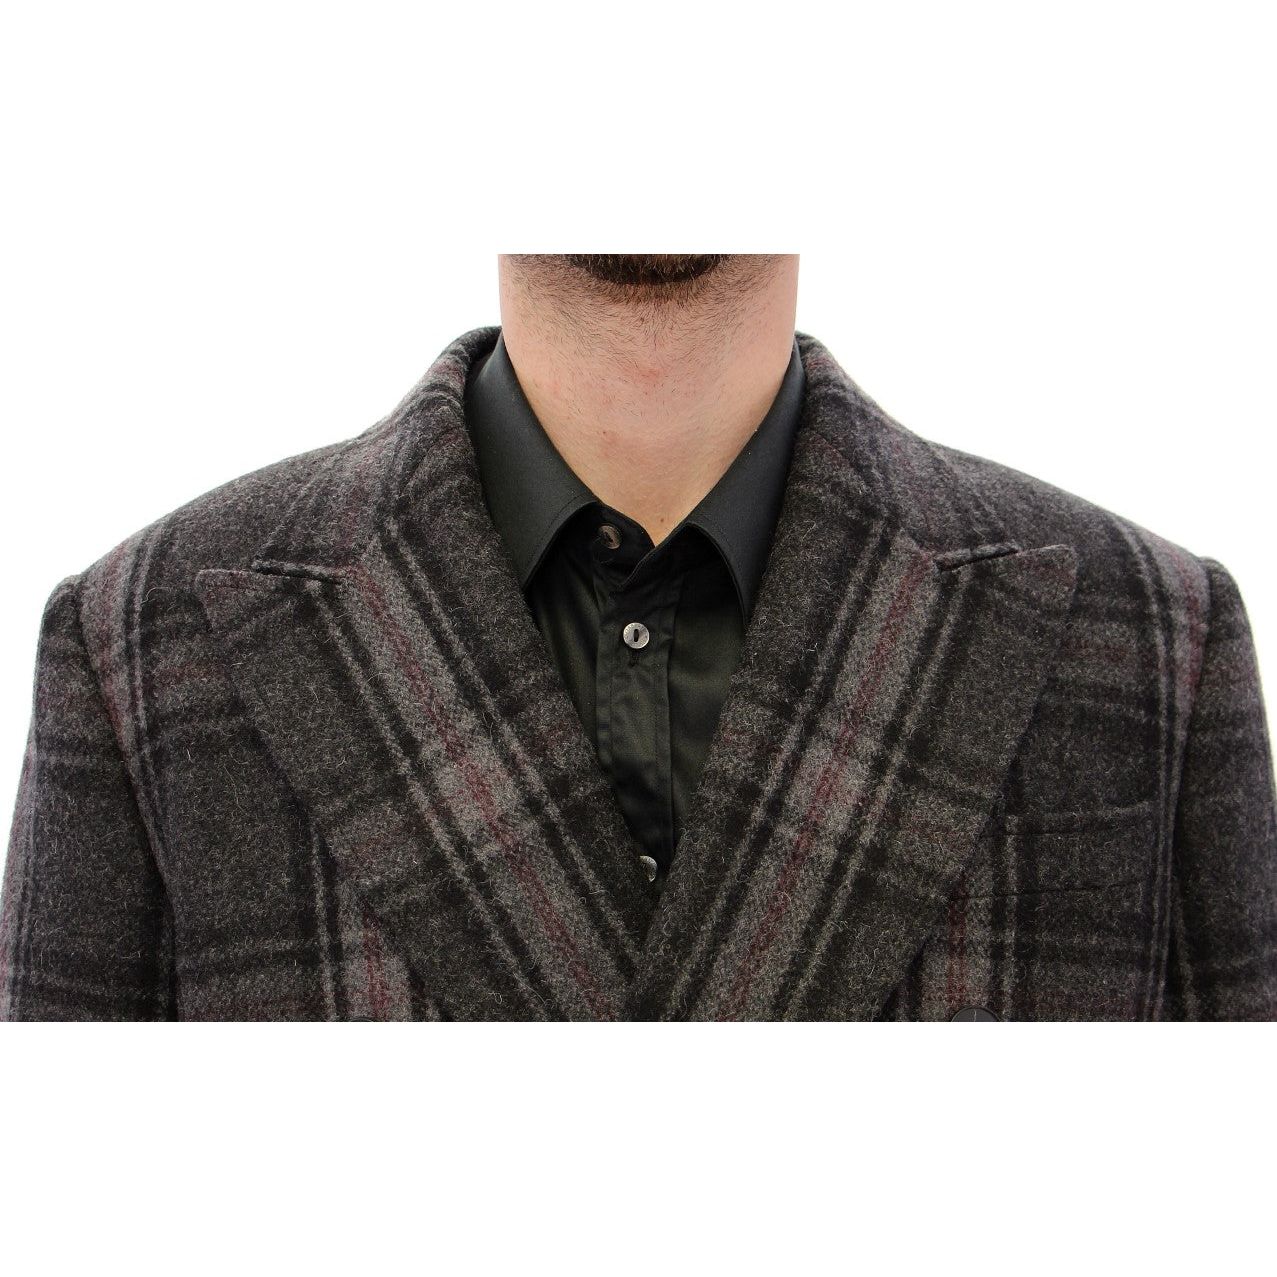 Dolce & Gabbana Sicilia Checkered Wool Blend Coat Coats & Jackets gray-double-breasted-coat-jacket 53557-gray-double-breasted-coat-jacket-5.jpg